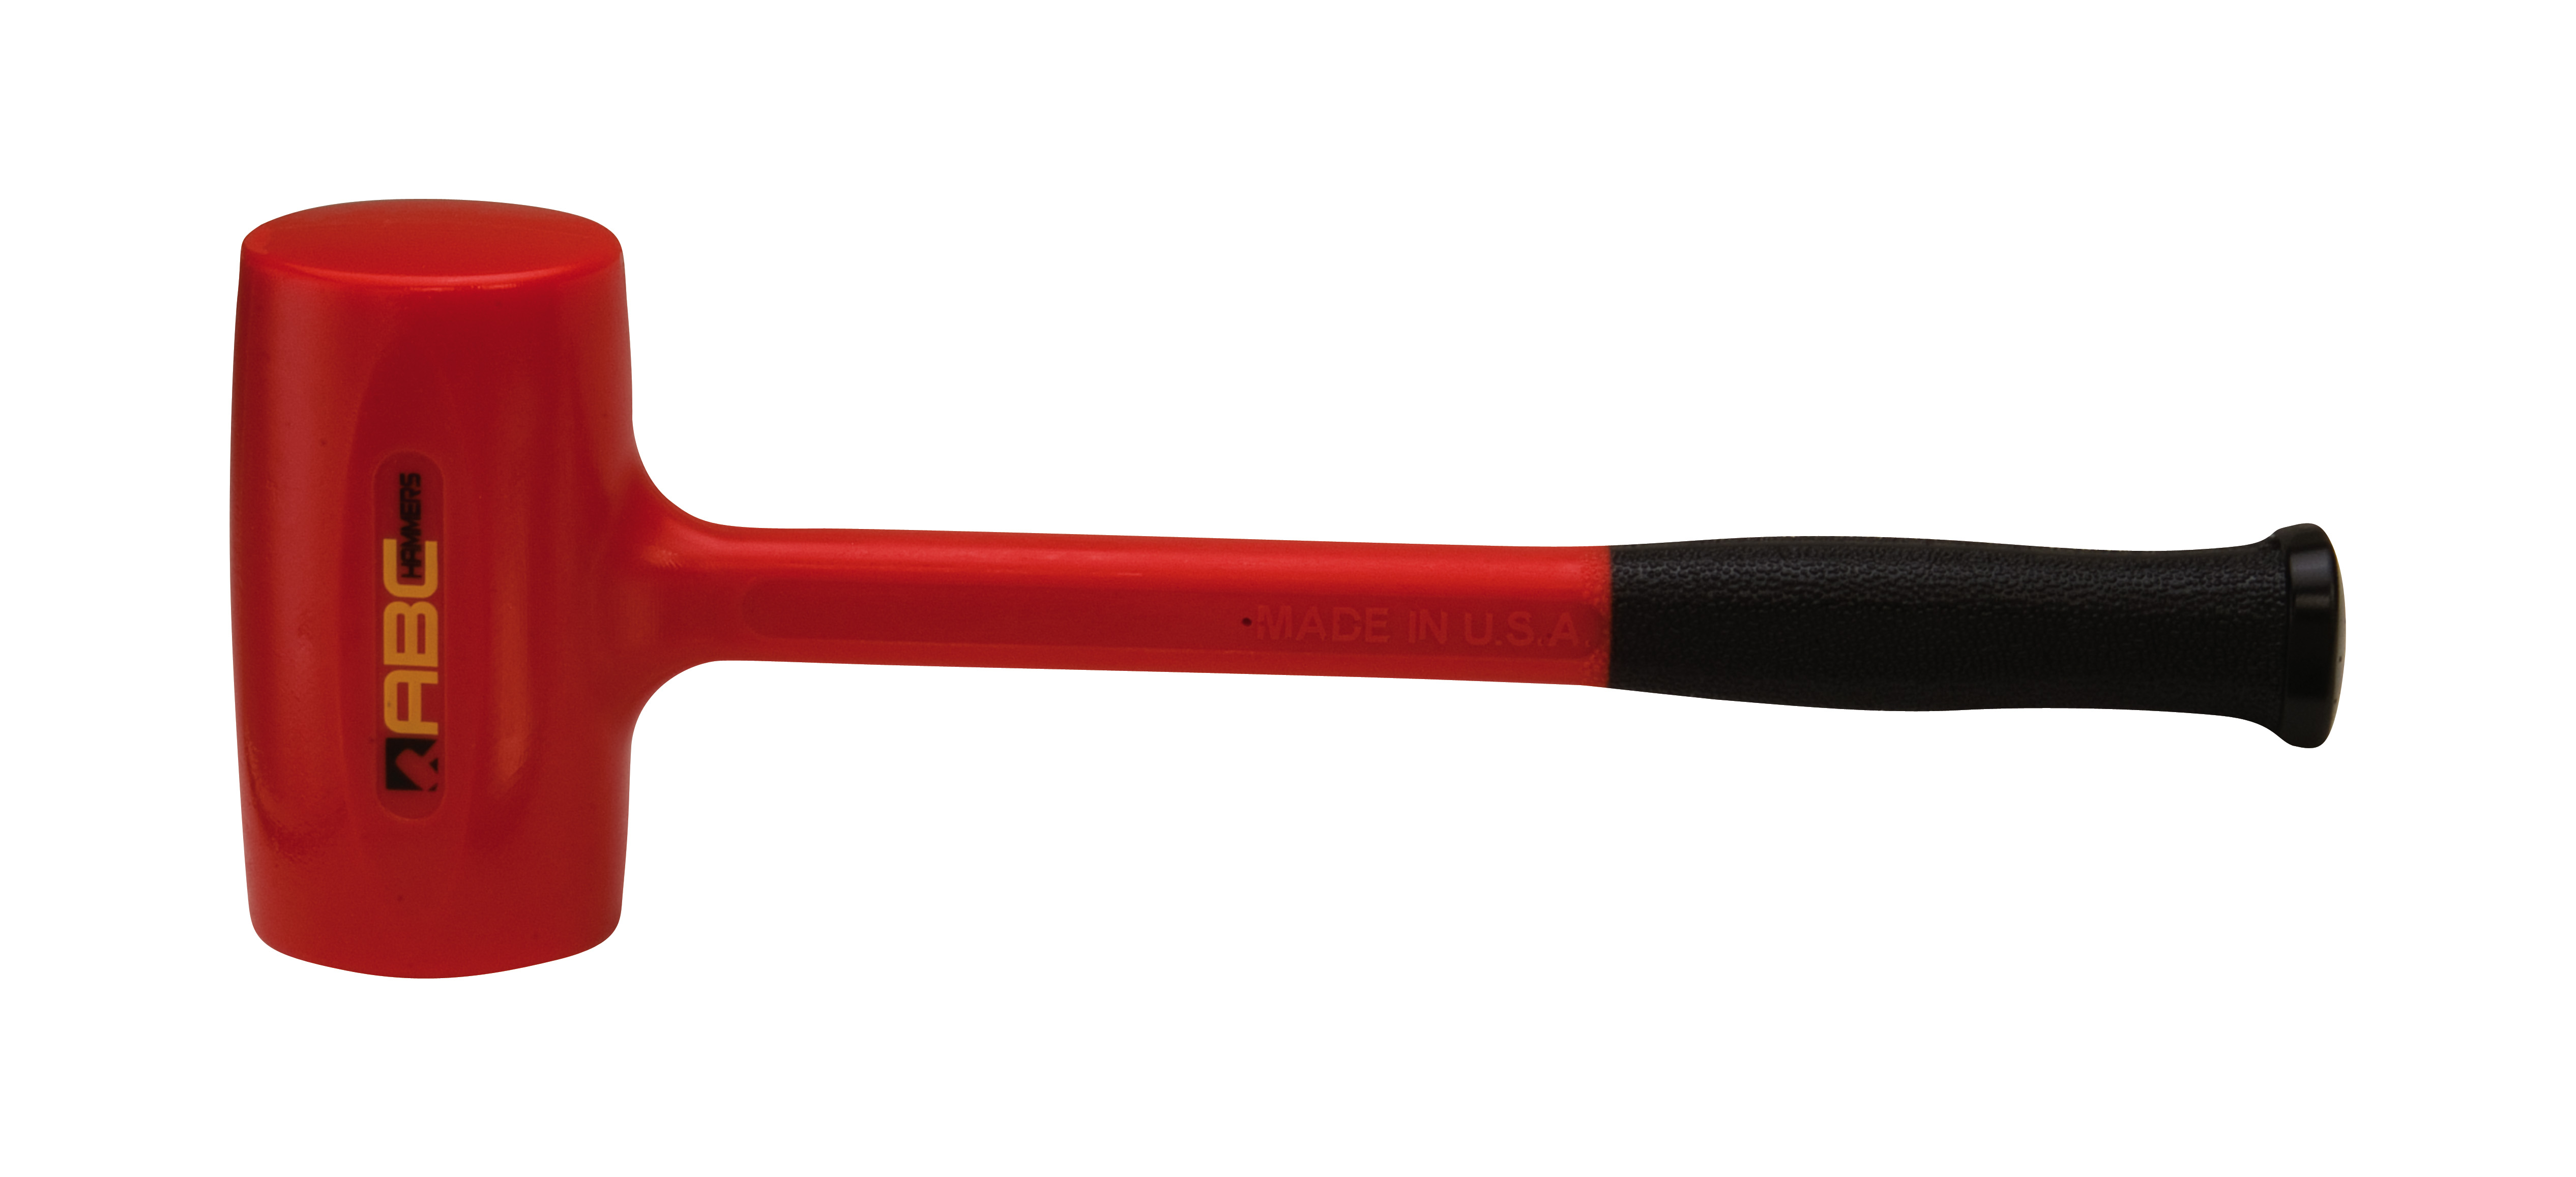 53 oz. Polyurethane Dead Blow Hammer - Overall Length 15.25"